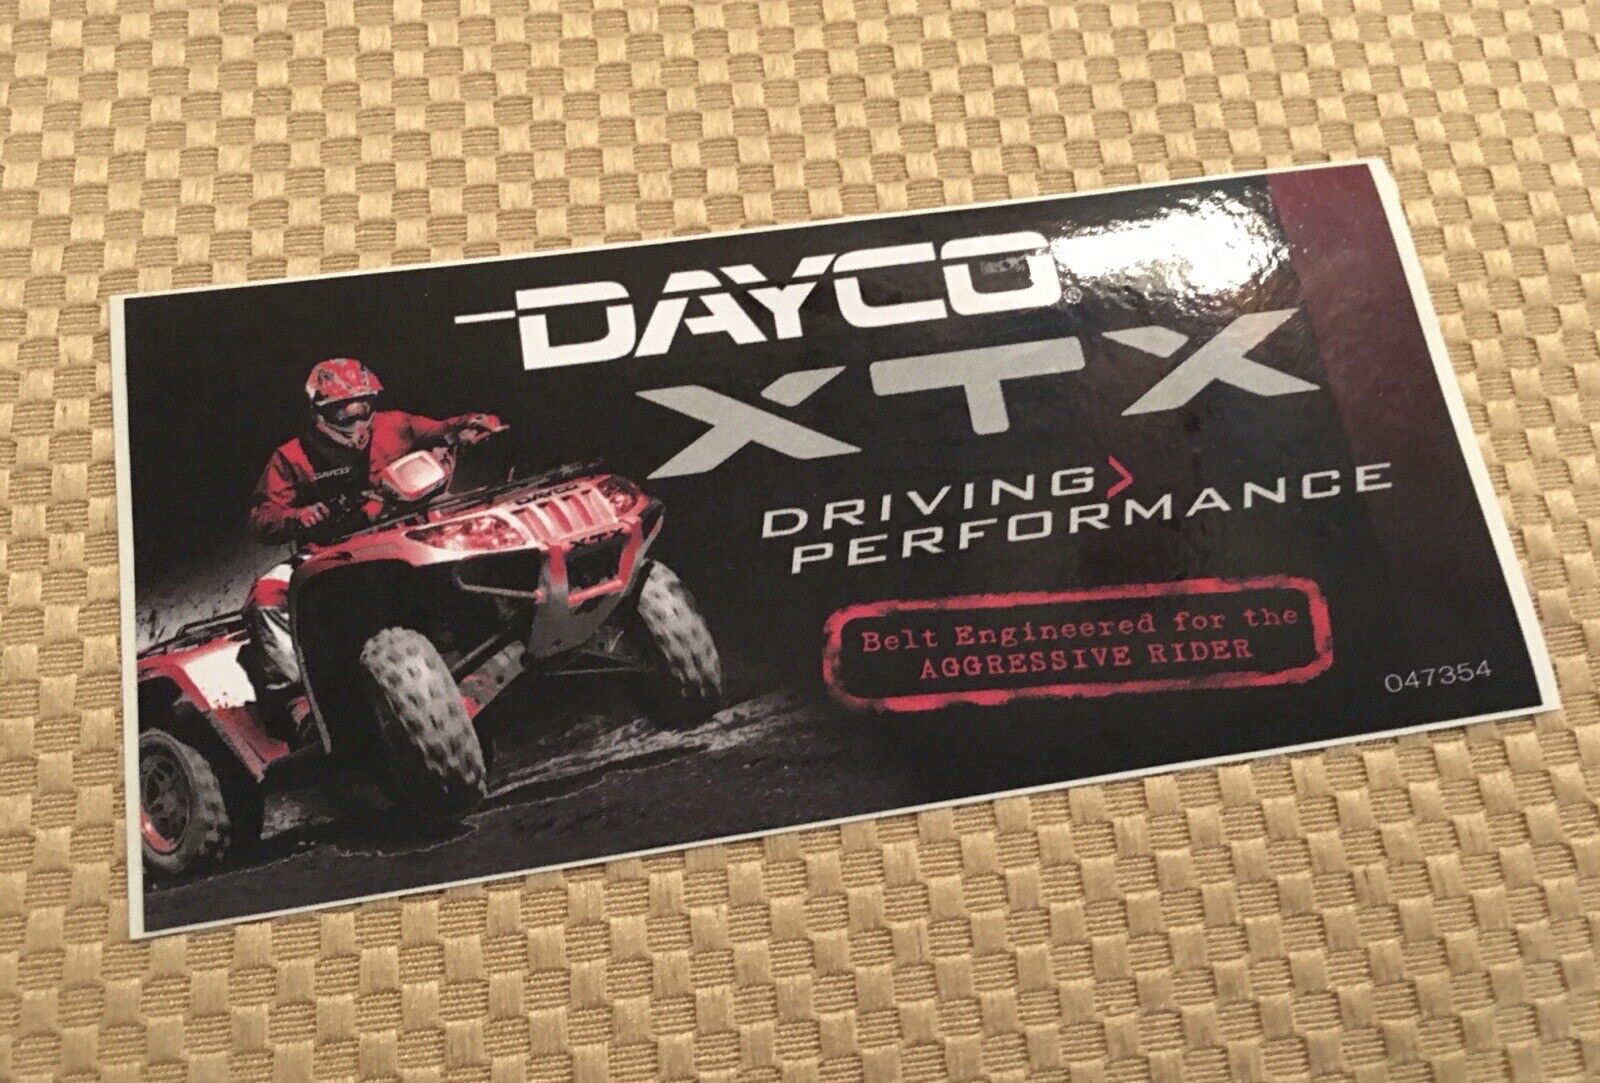 DAYCO XTX BELT ATV UTV OFF ROAD Glossy Sticker Promo Aggressive Performance